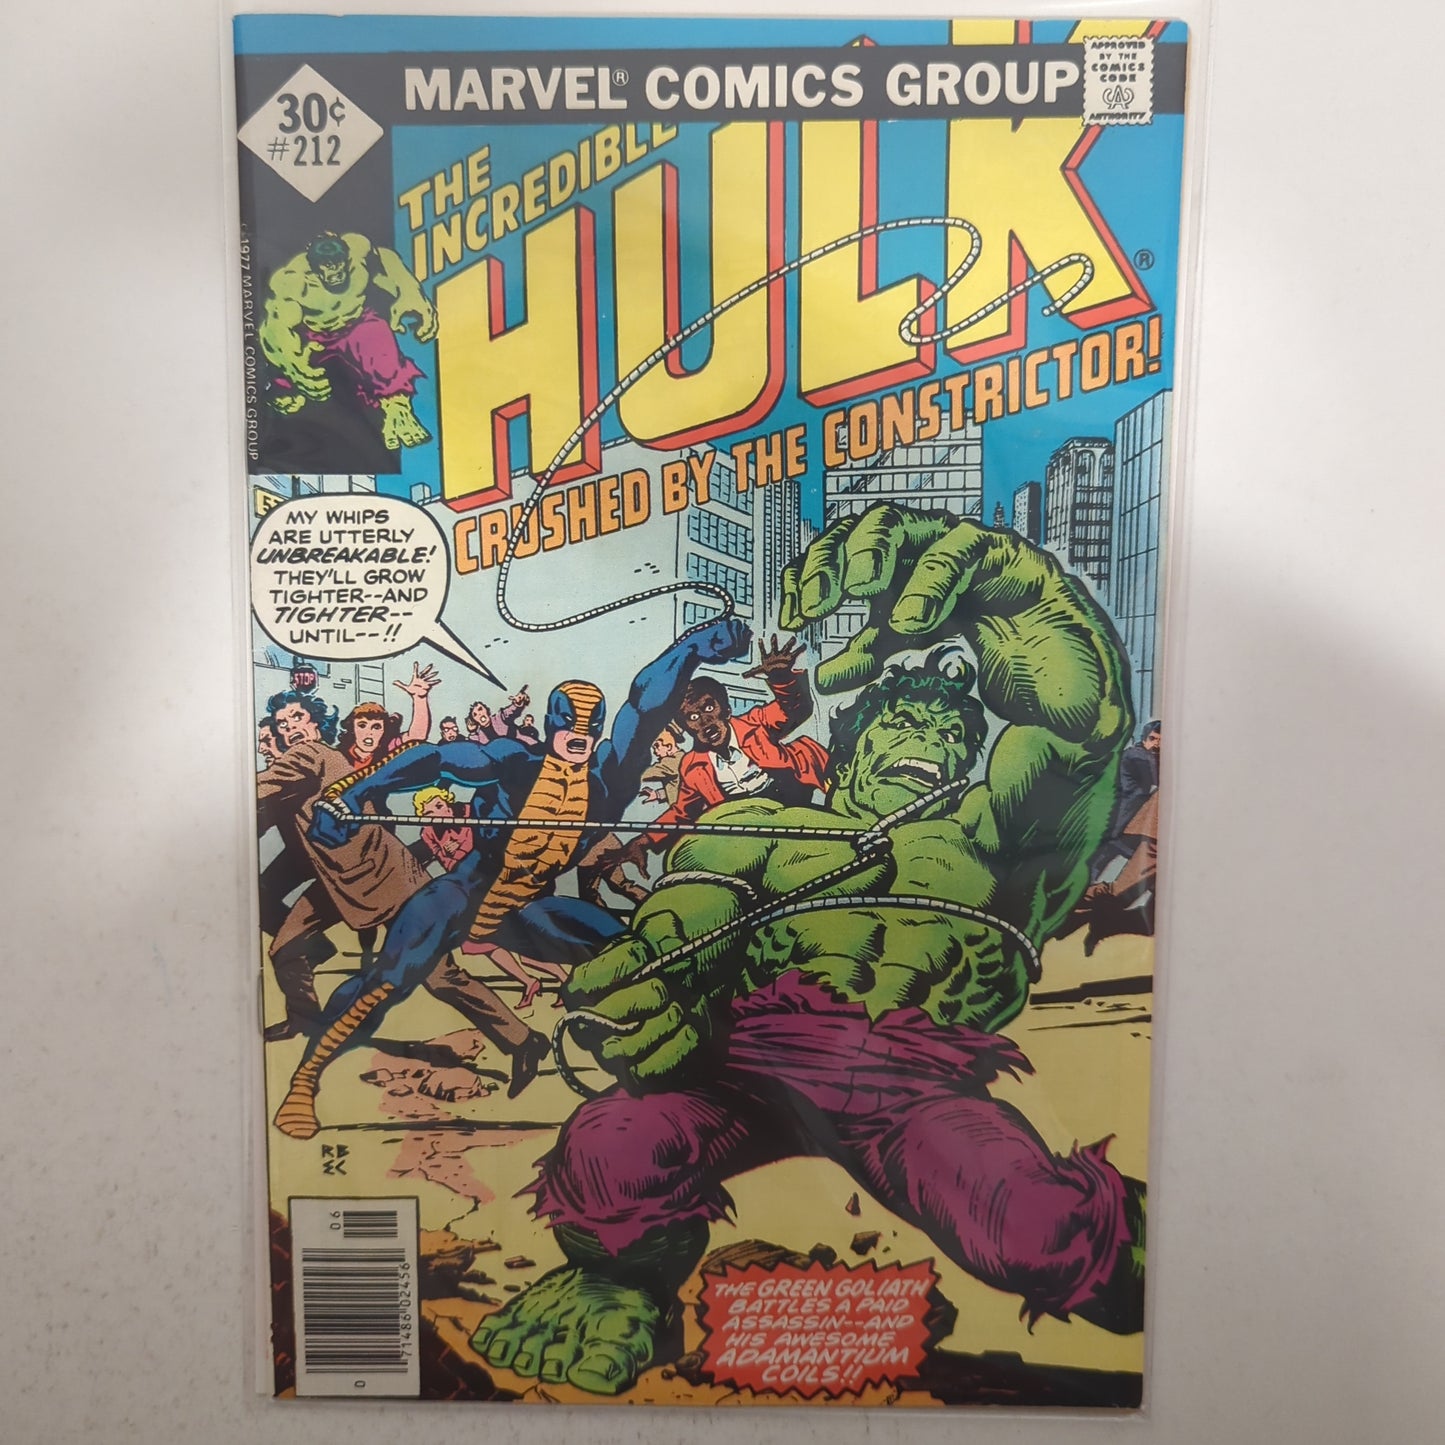 The Incredible Hulk #212 Newsstand